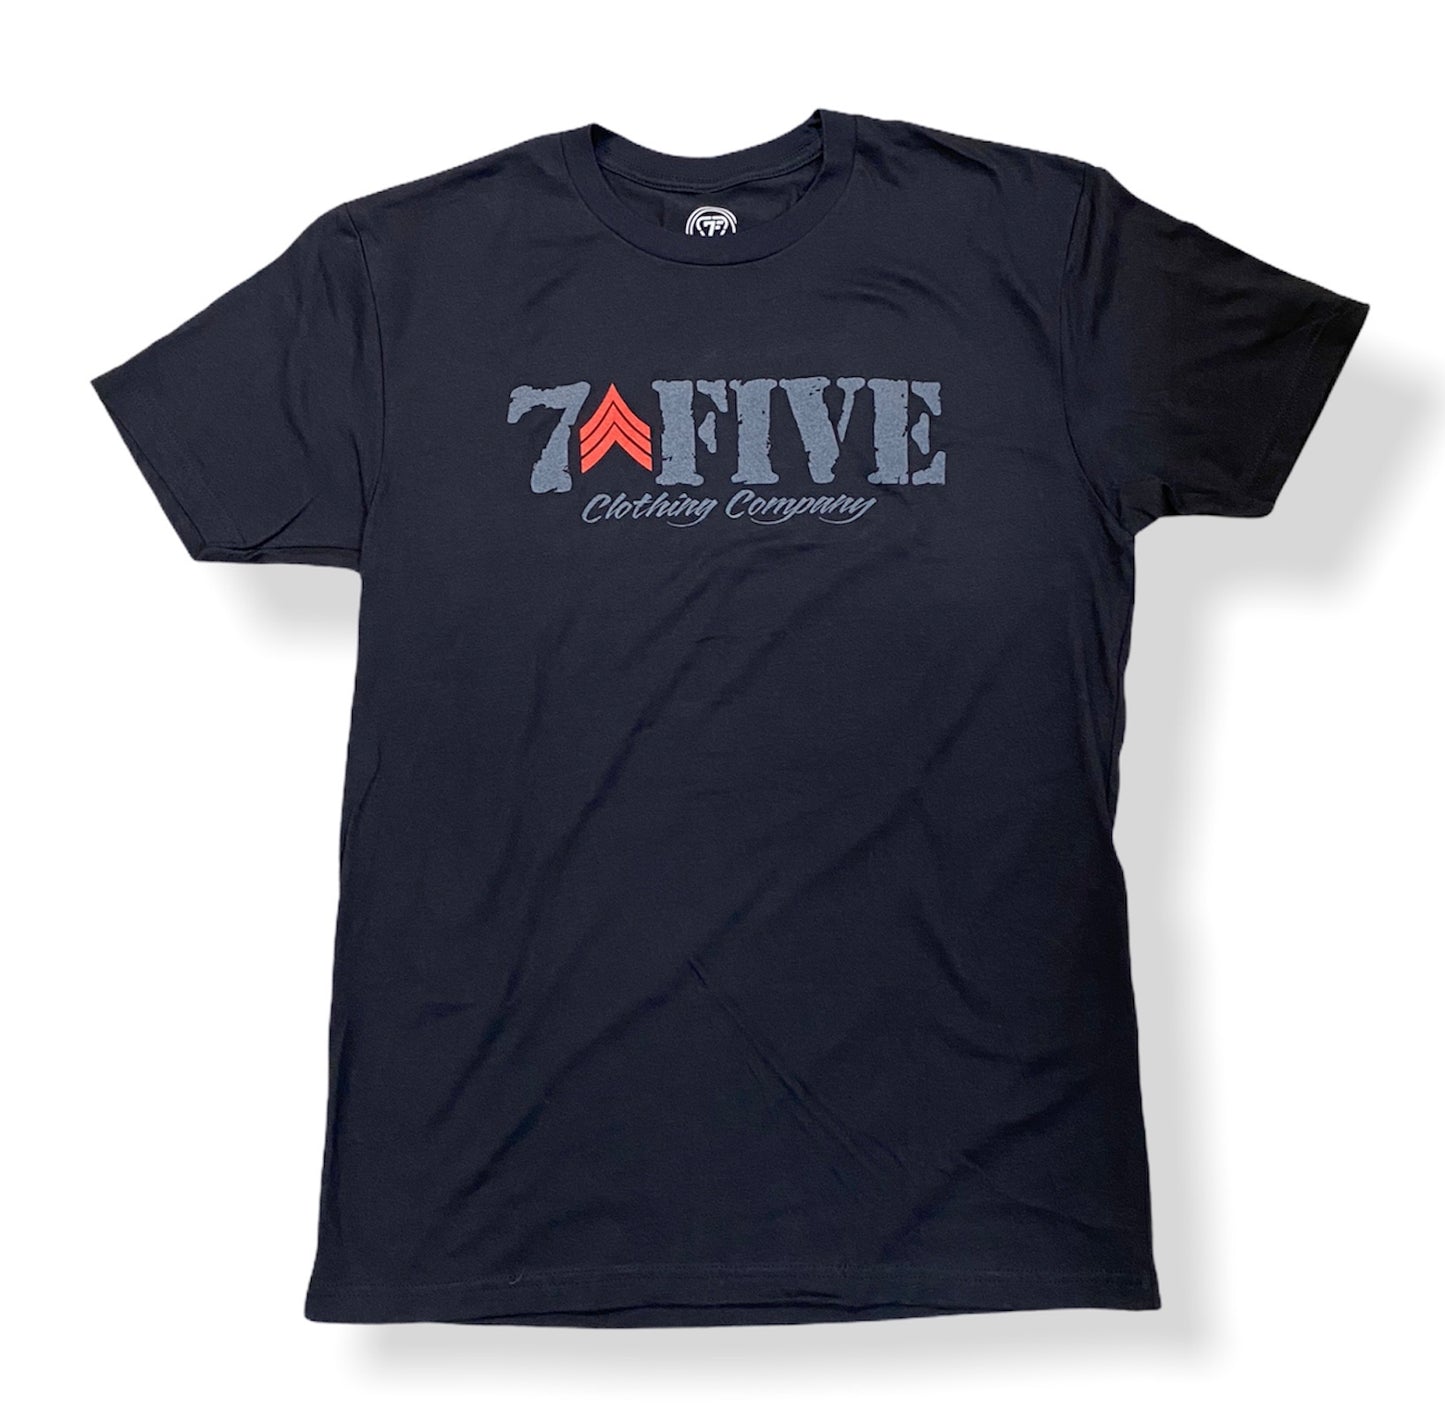 7Five Logo Tee - Black - 7Five Clothing Co.